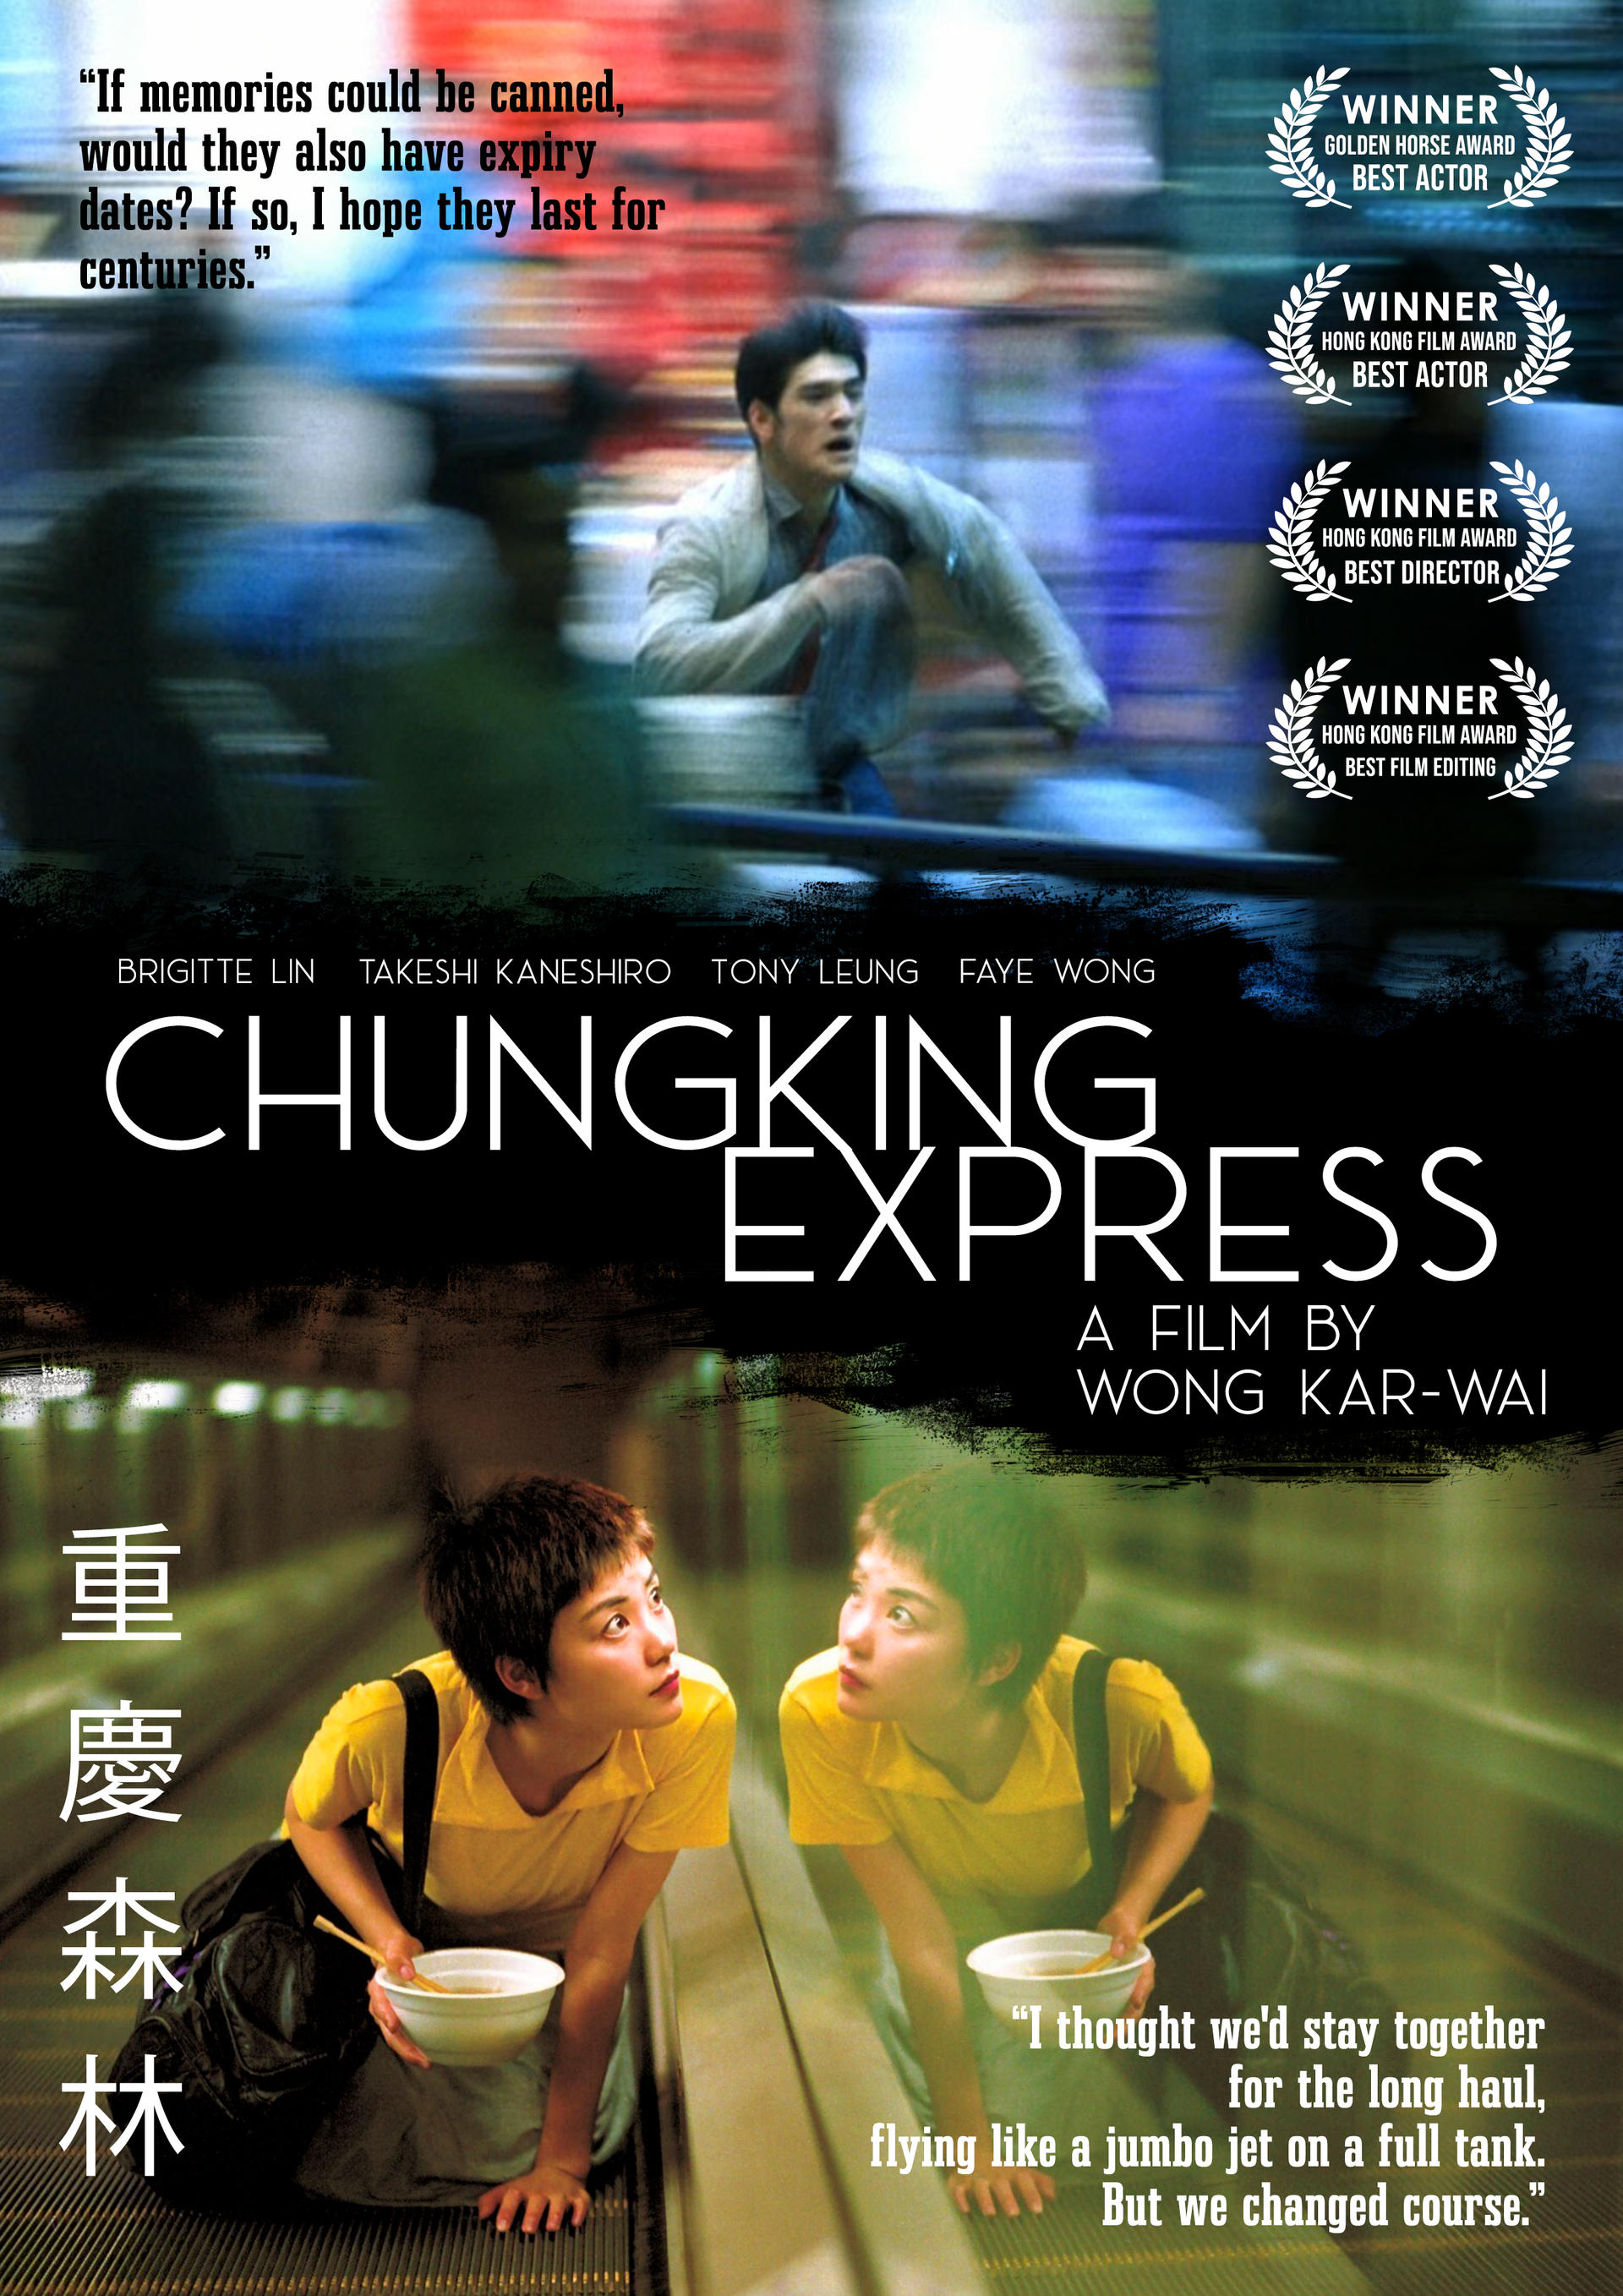 Chungking Express (Movie Poster) by SebLakes31 on DeviantArt